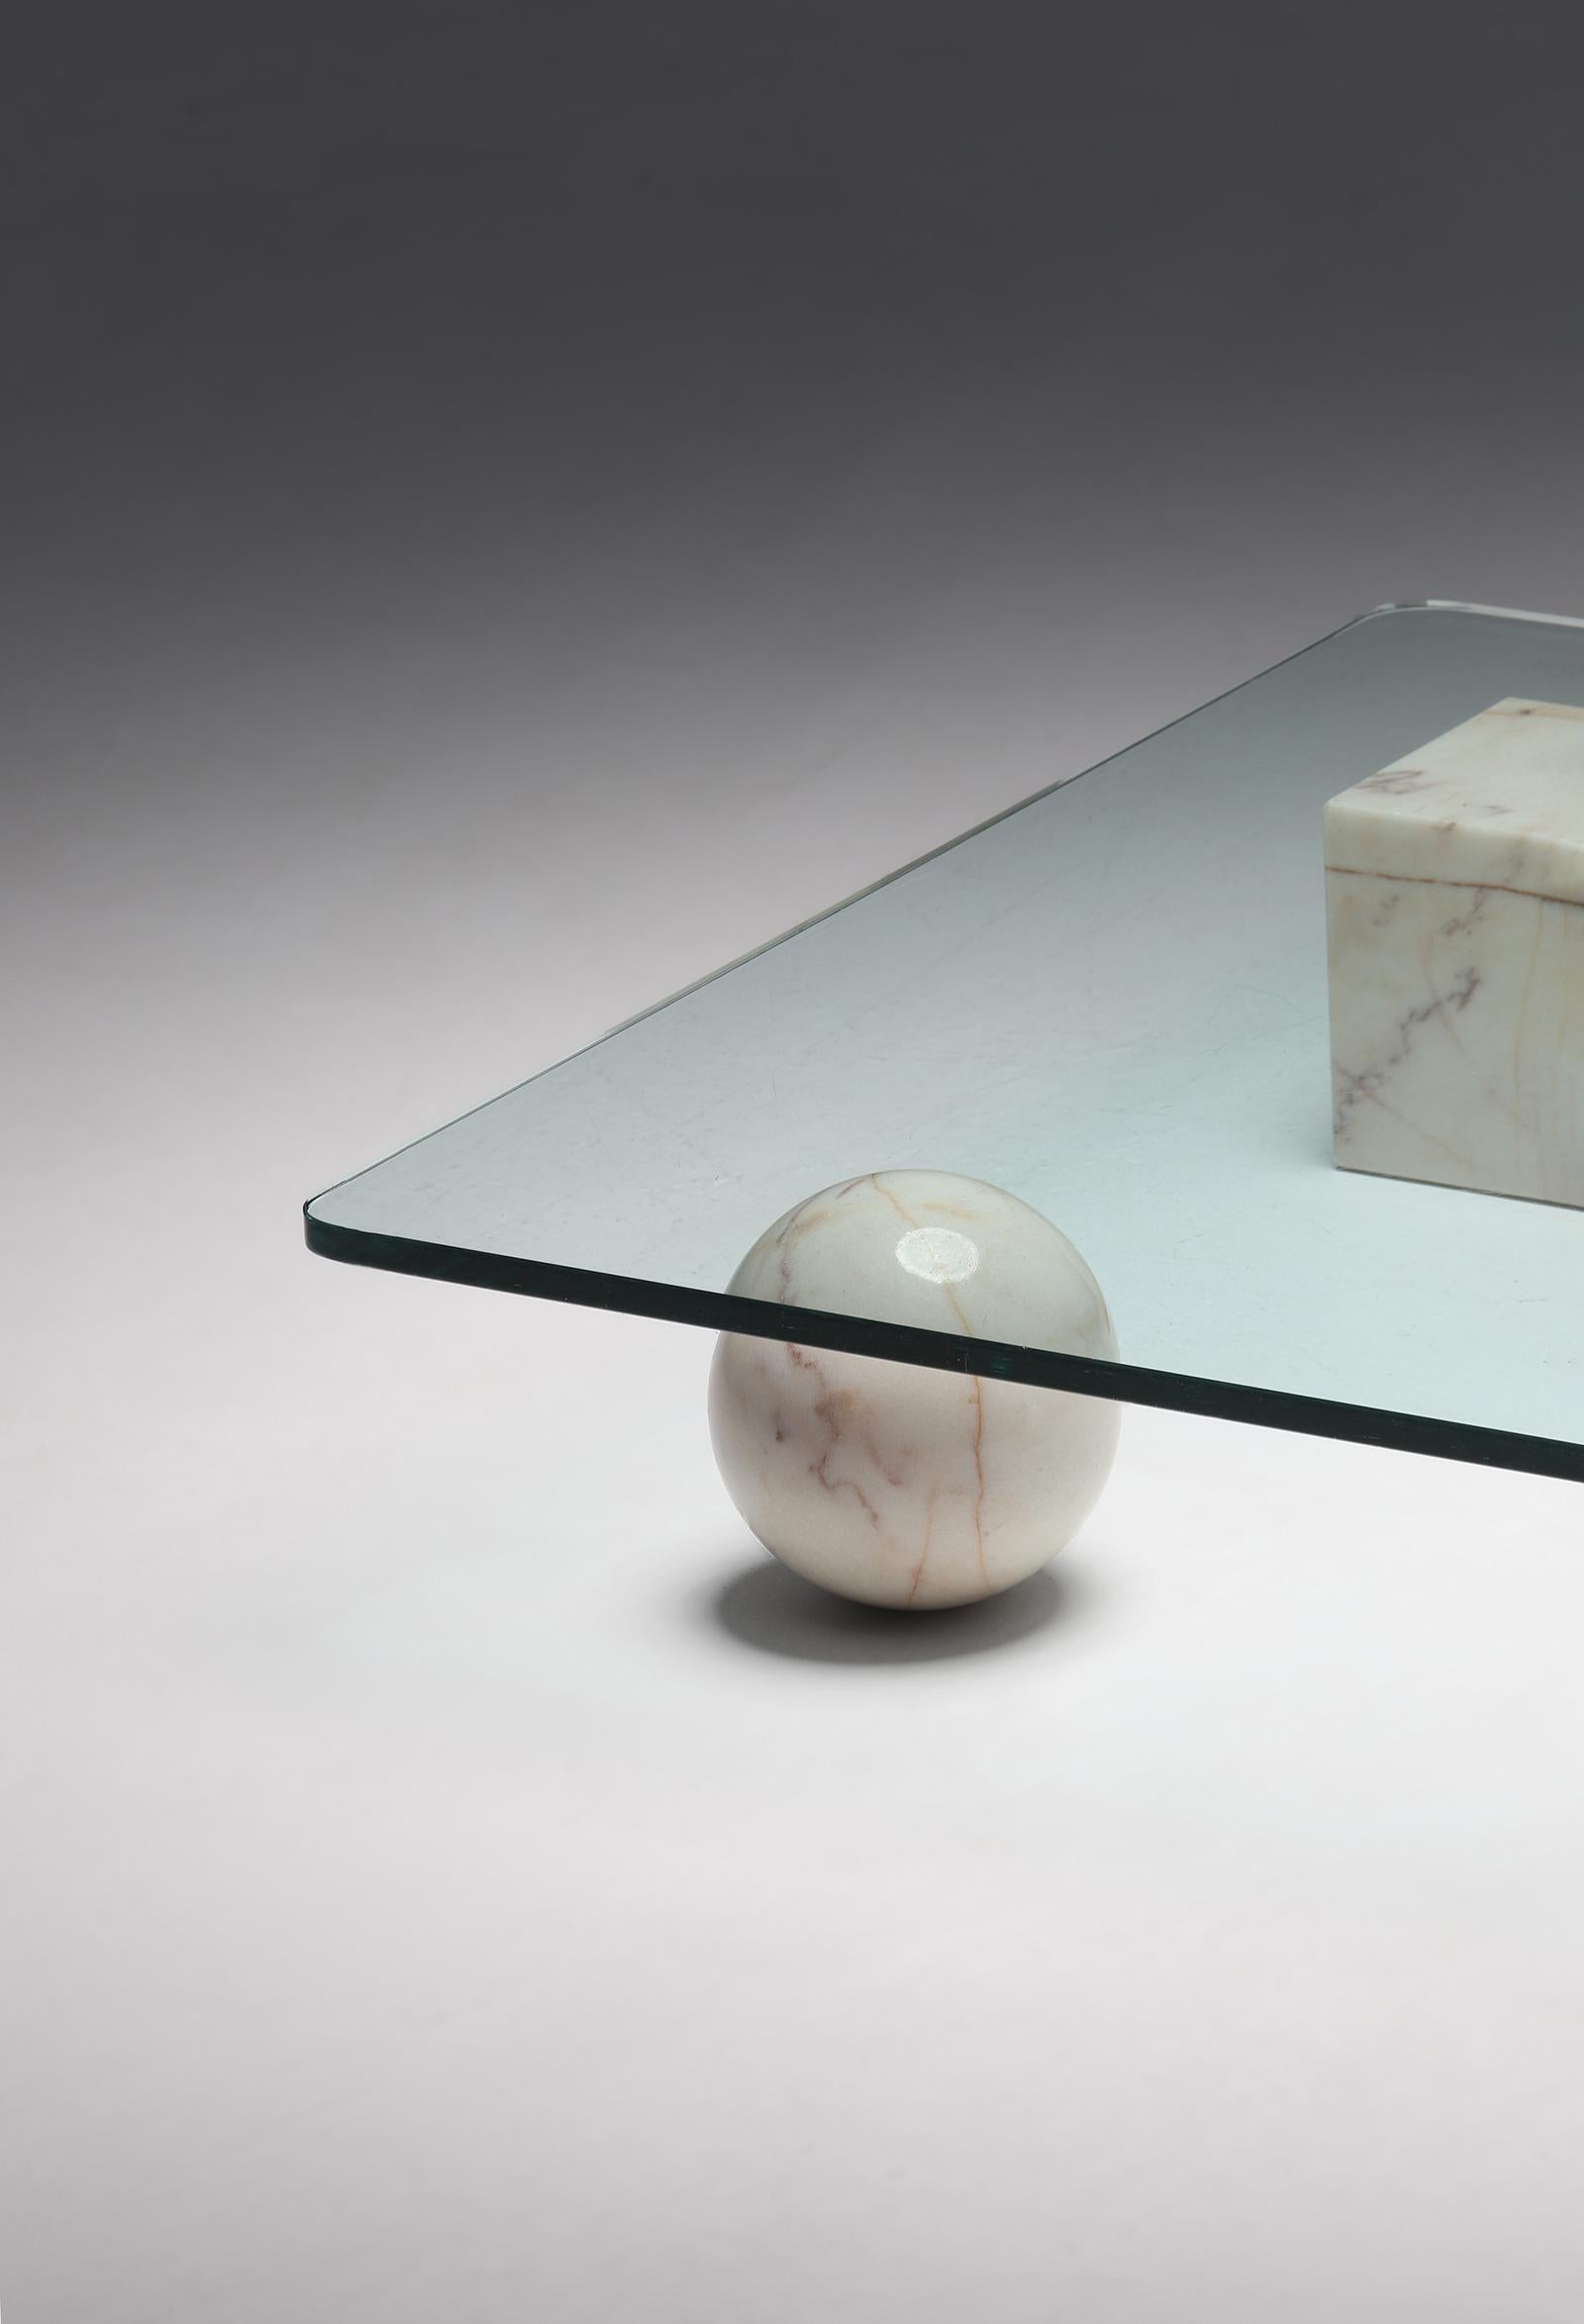 Decorative Coffee Table by Lella and Massimo Vignelli, Designed in the 1970s 2